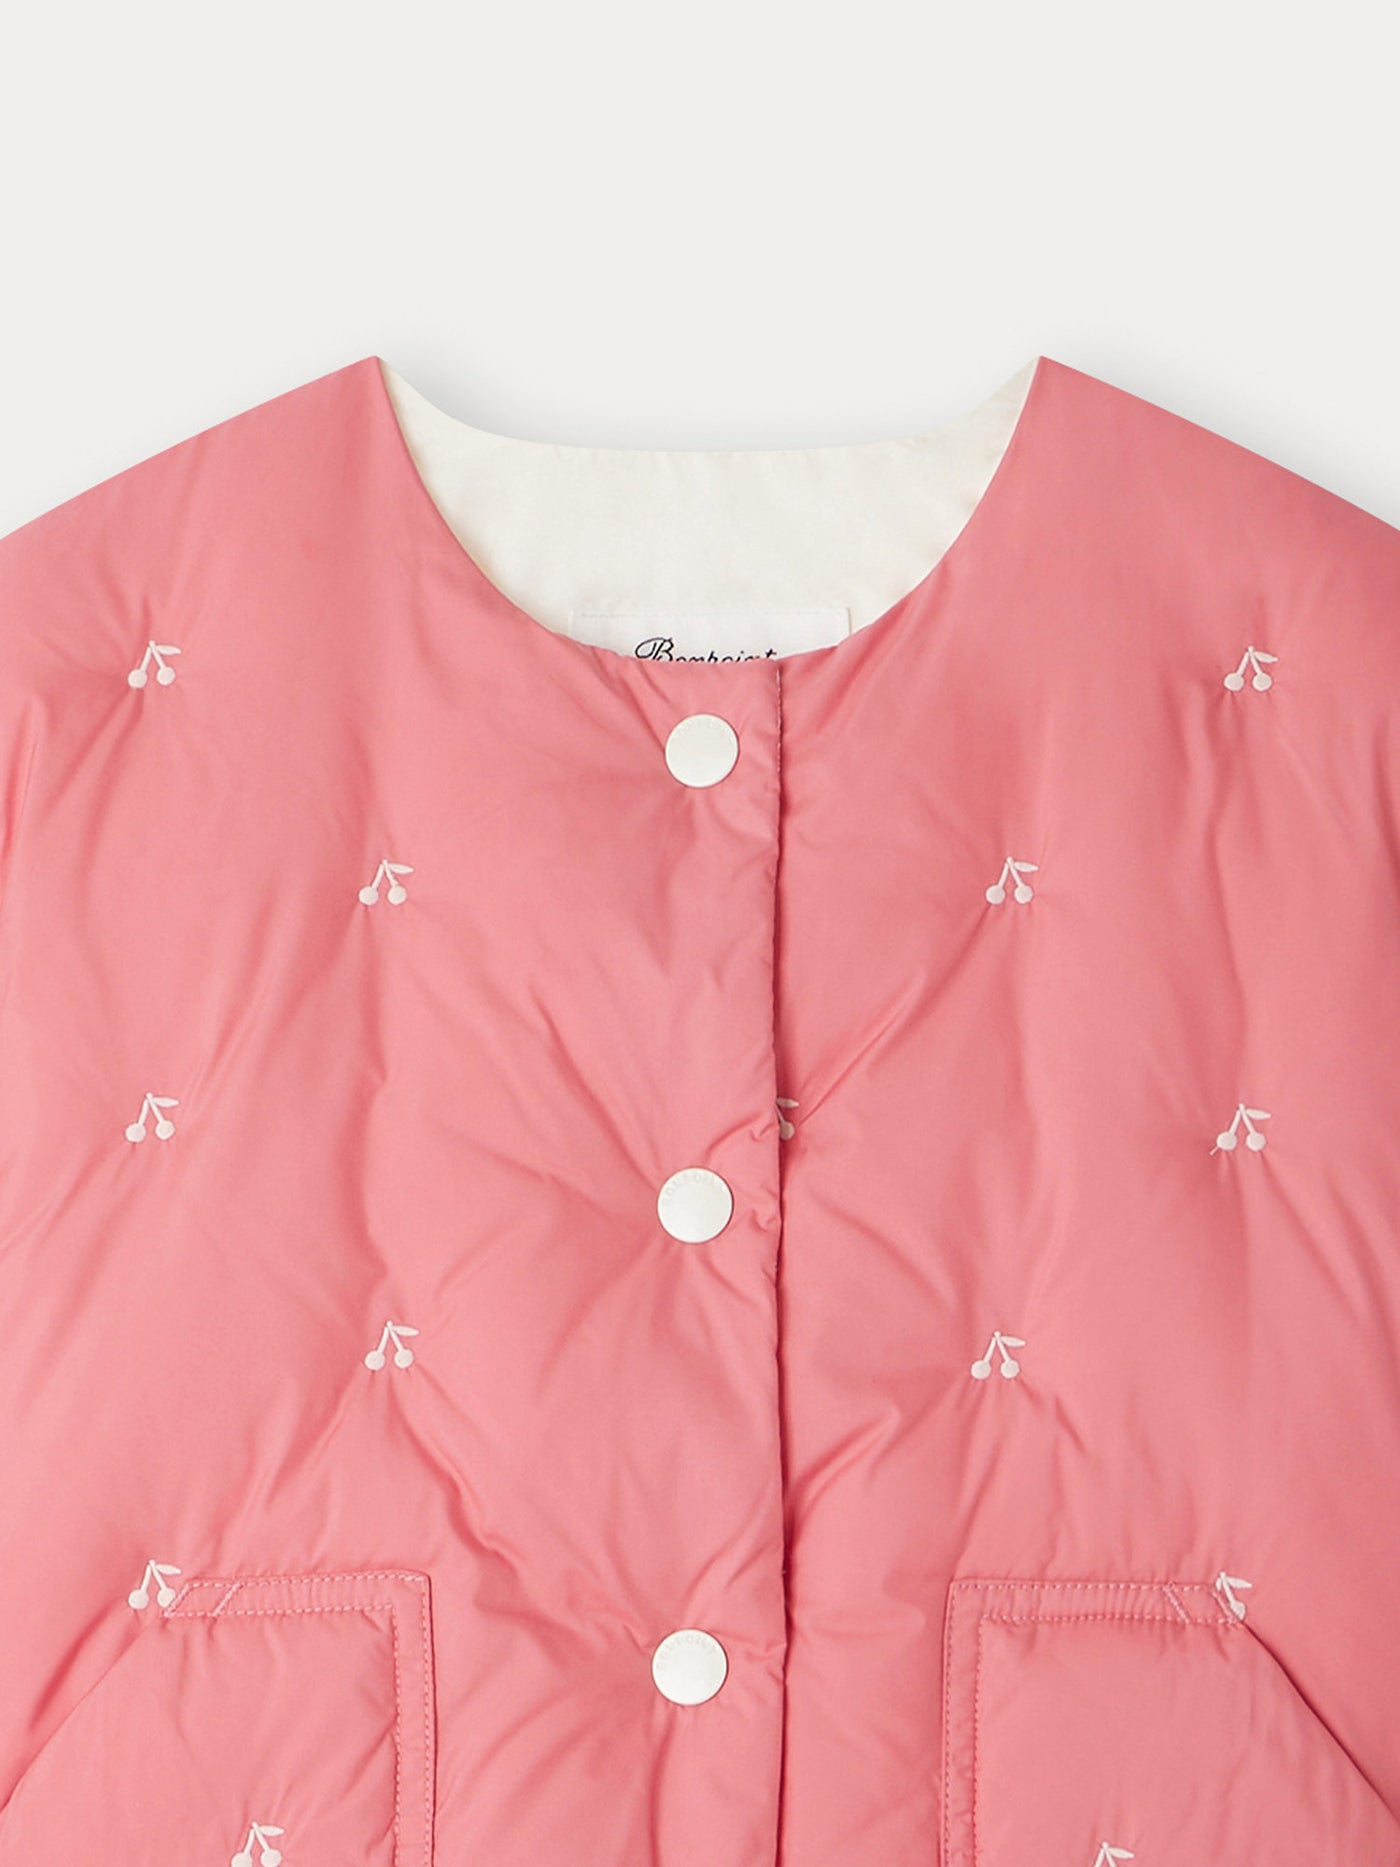 Baila Jacket camellia pink